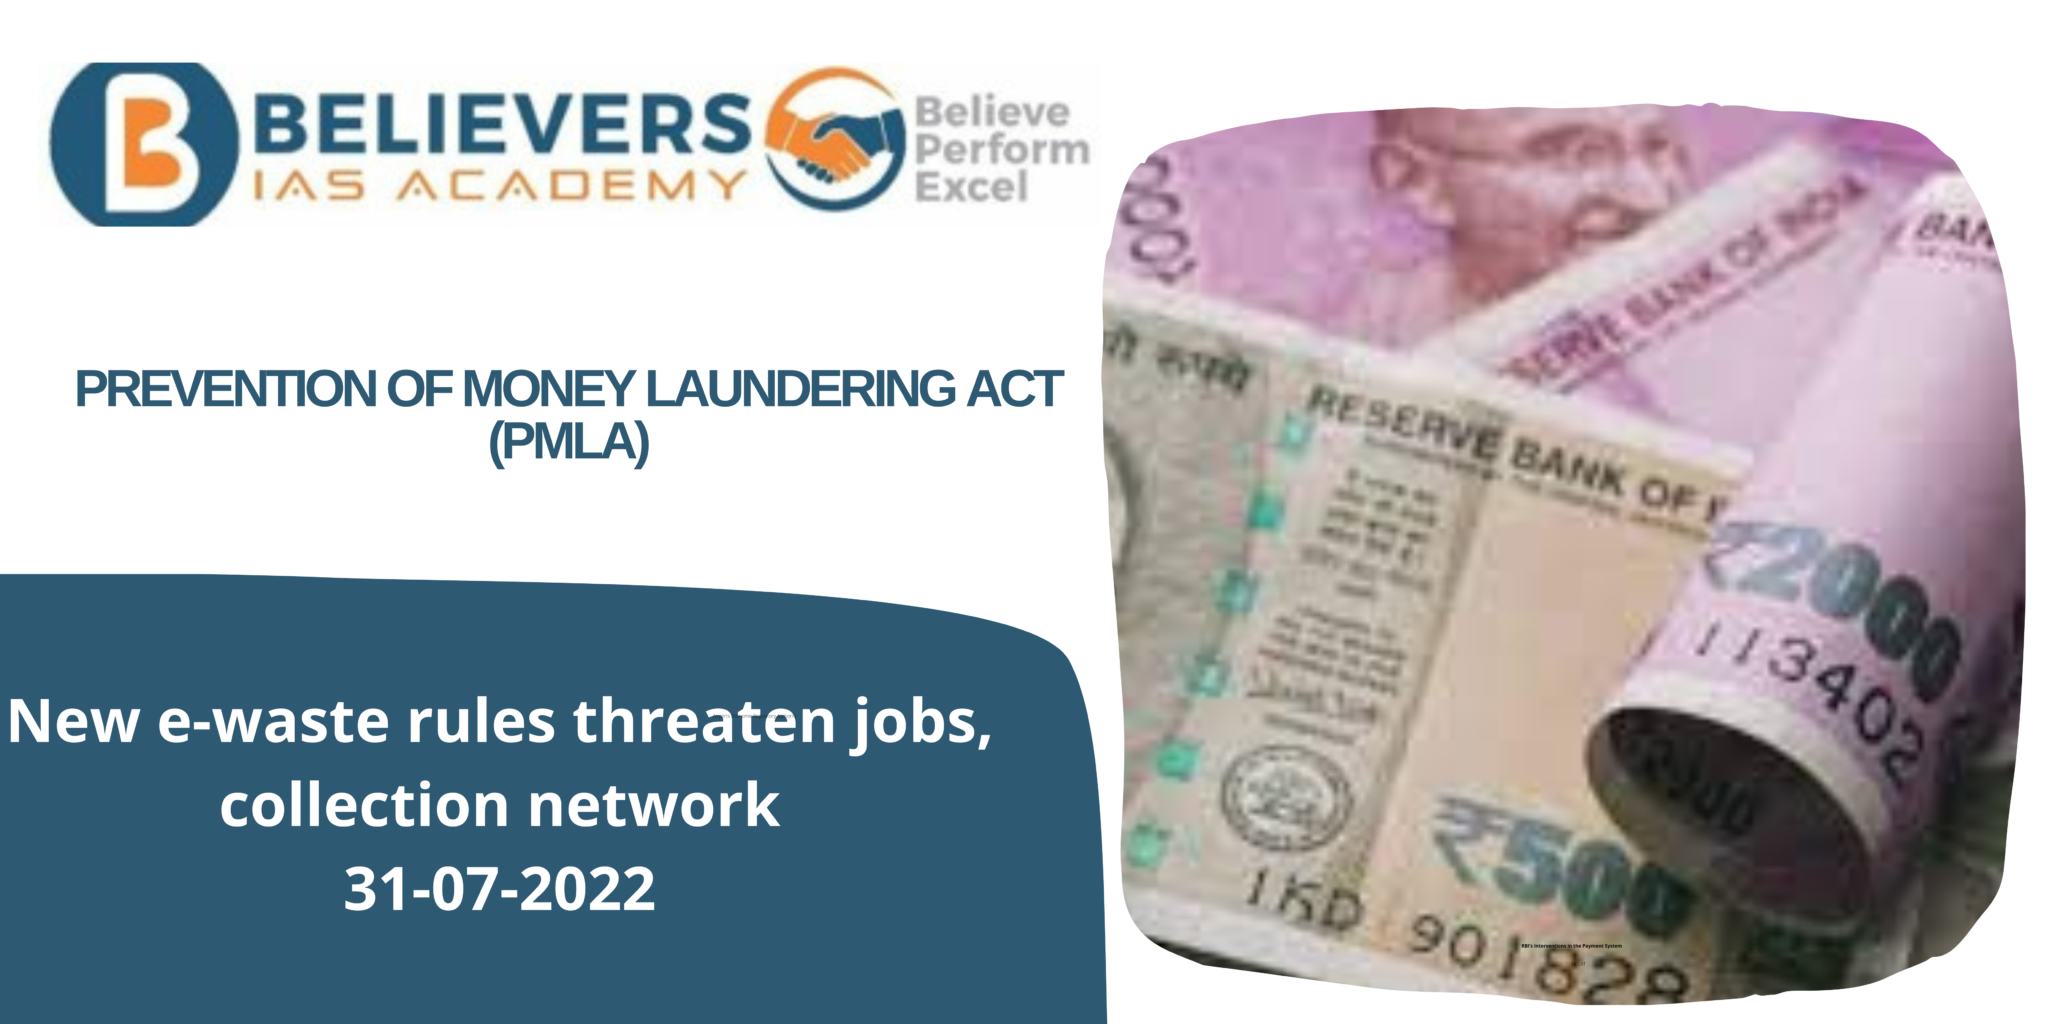 Prevention of Money Laundering Act (PMLA) Believers IAS Academy